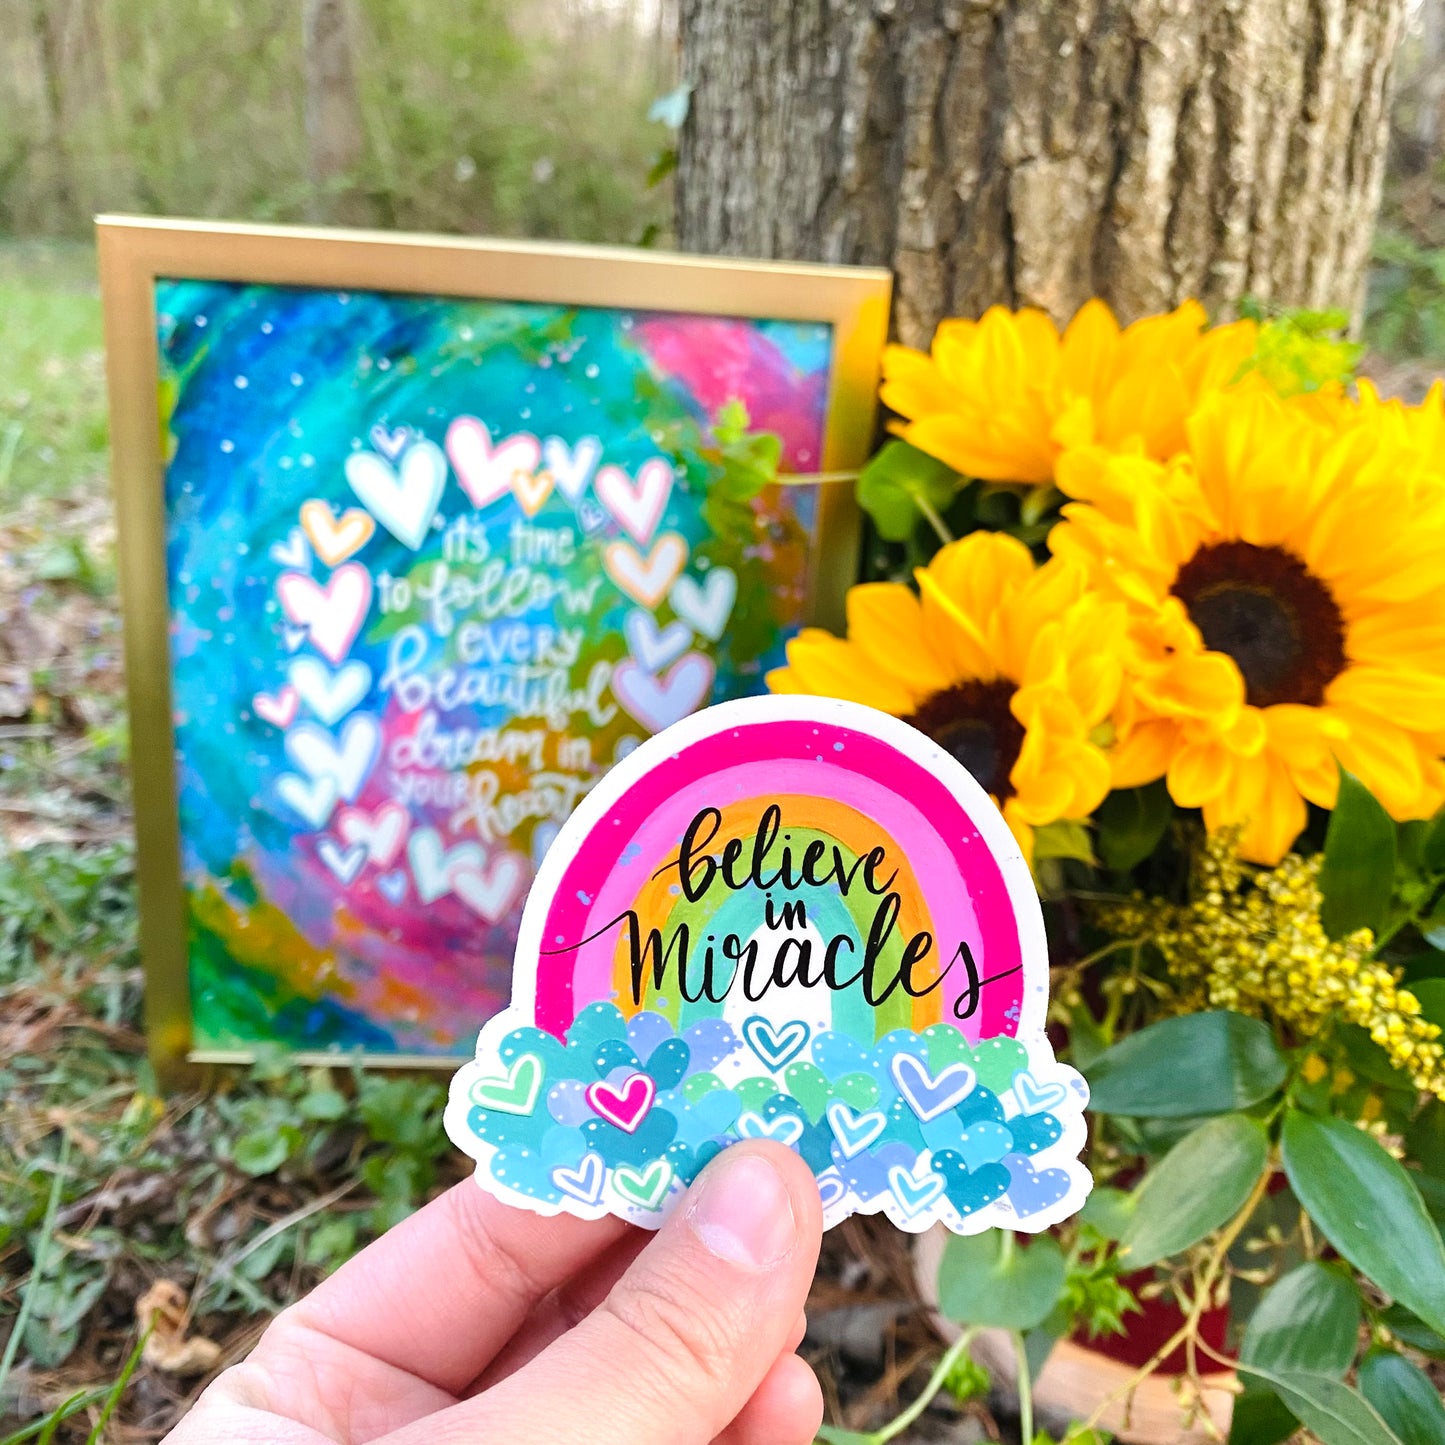 Rainbow Hearts Vinyl Sticker - April 2021 Sticker of the Month